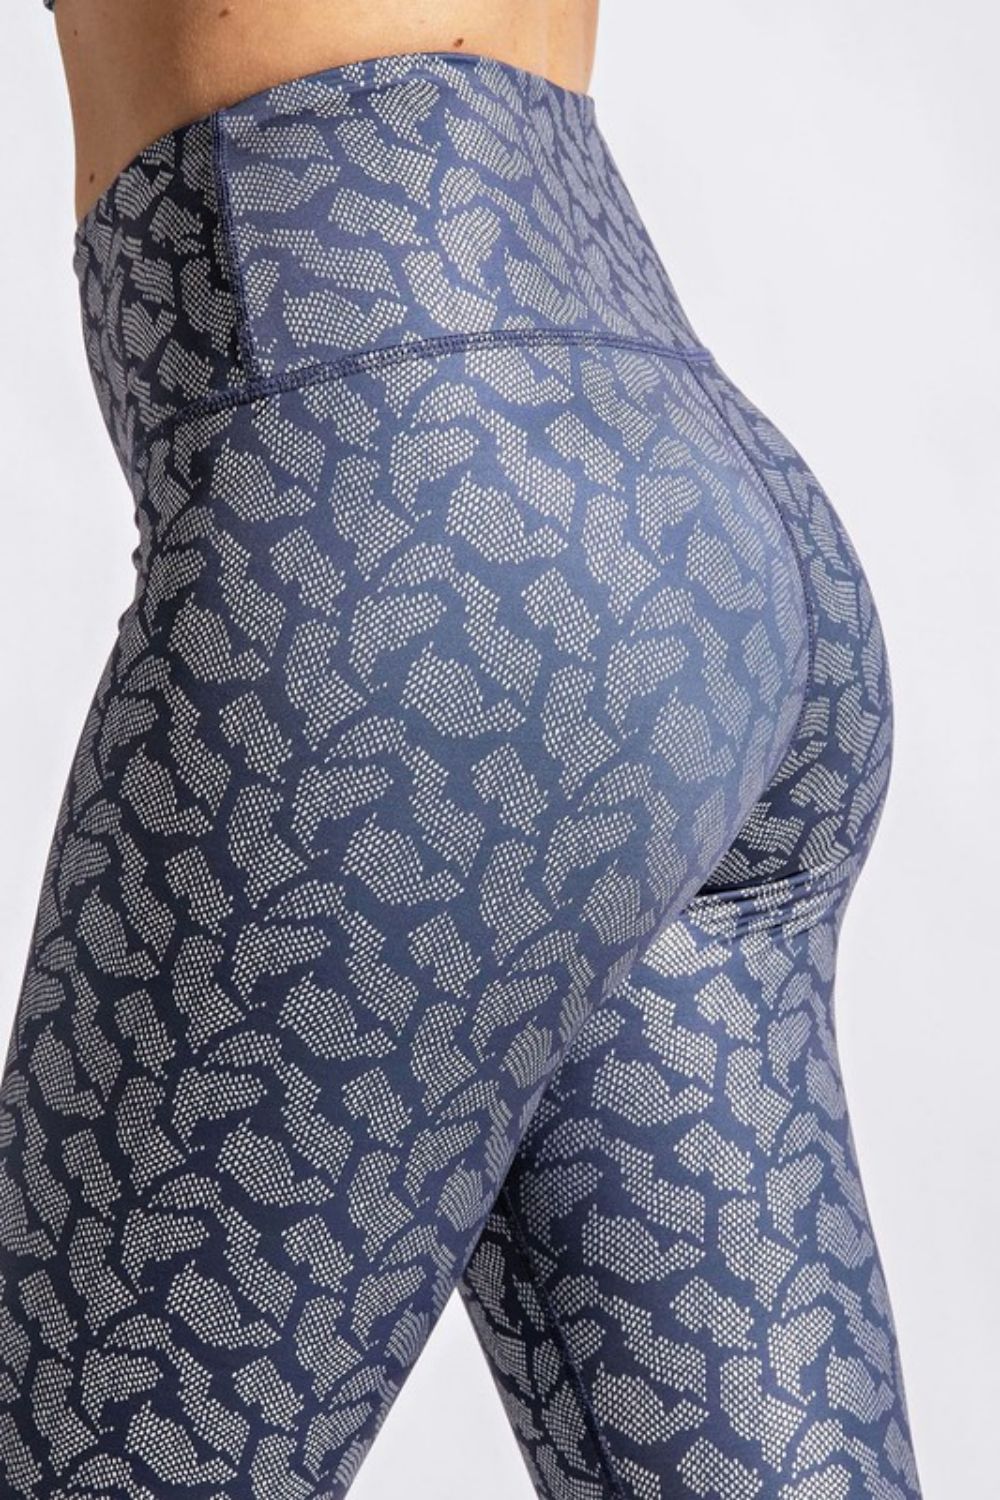 Rae Mode Full Size Printed High-Rise Yoga Leggings